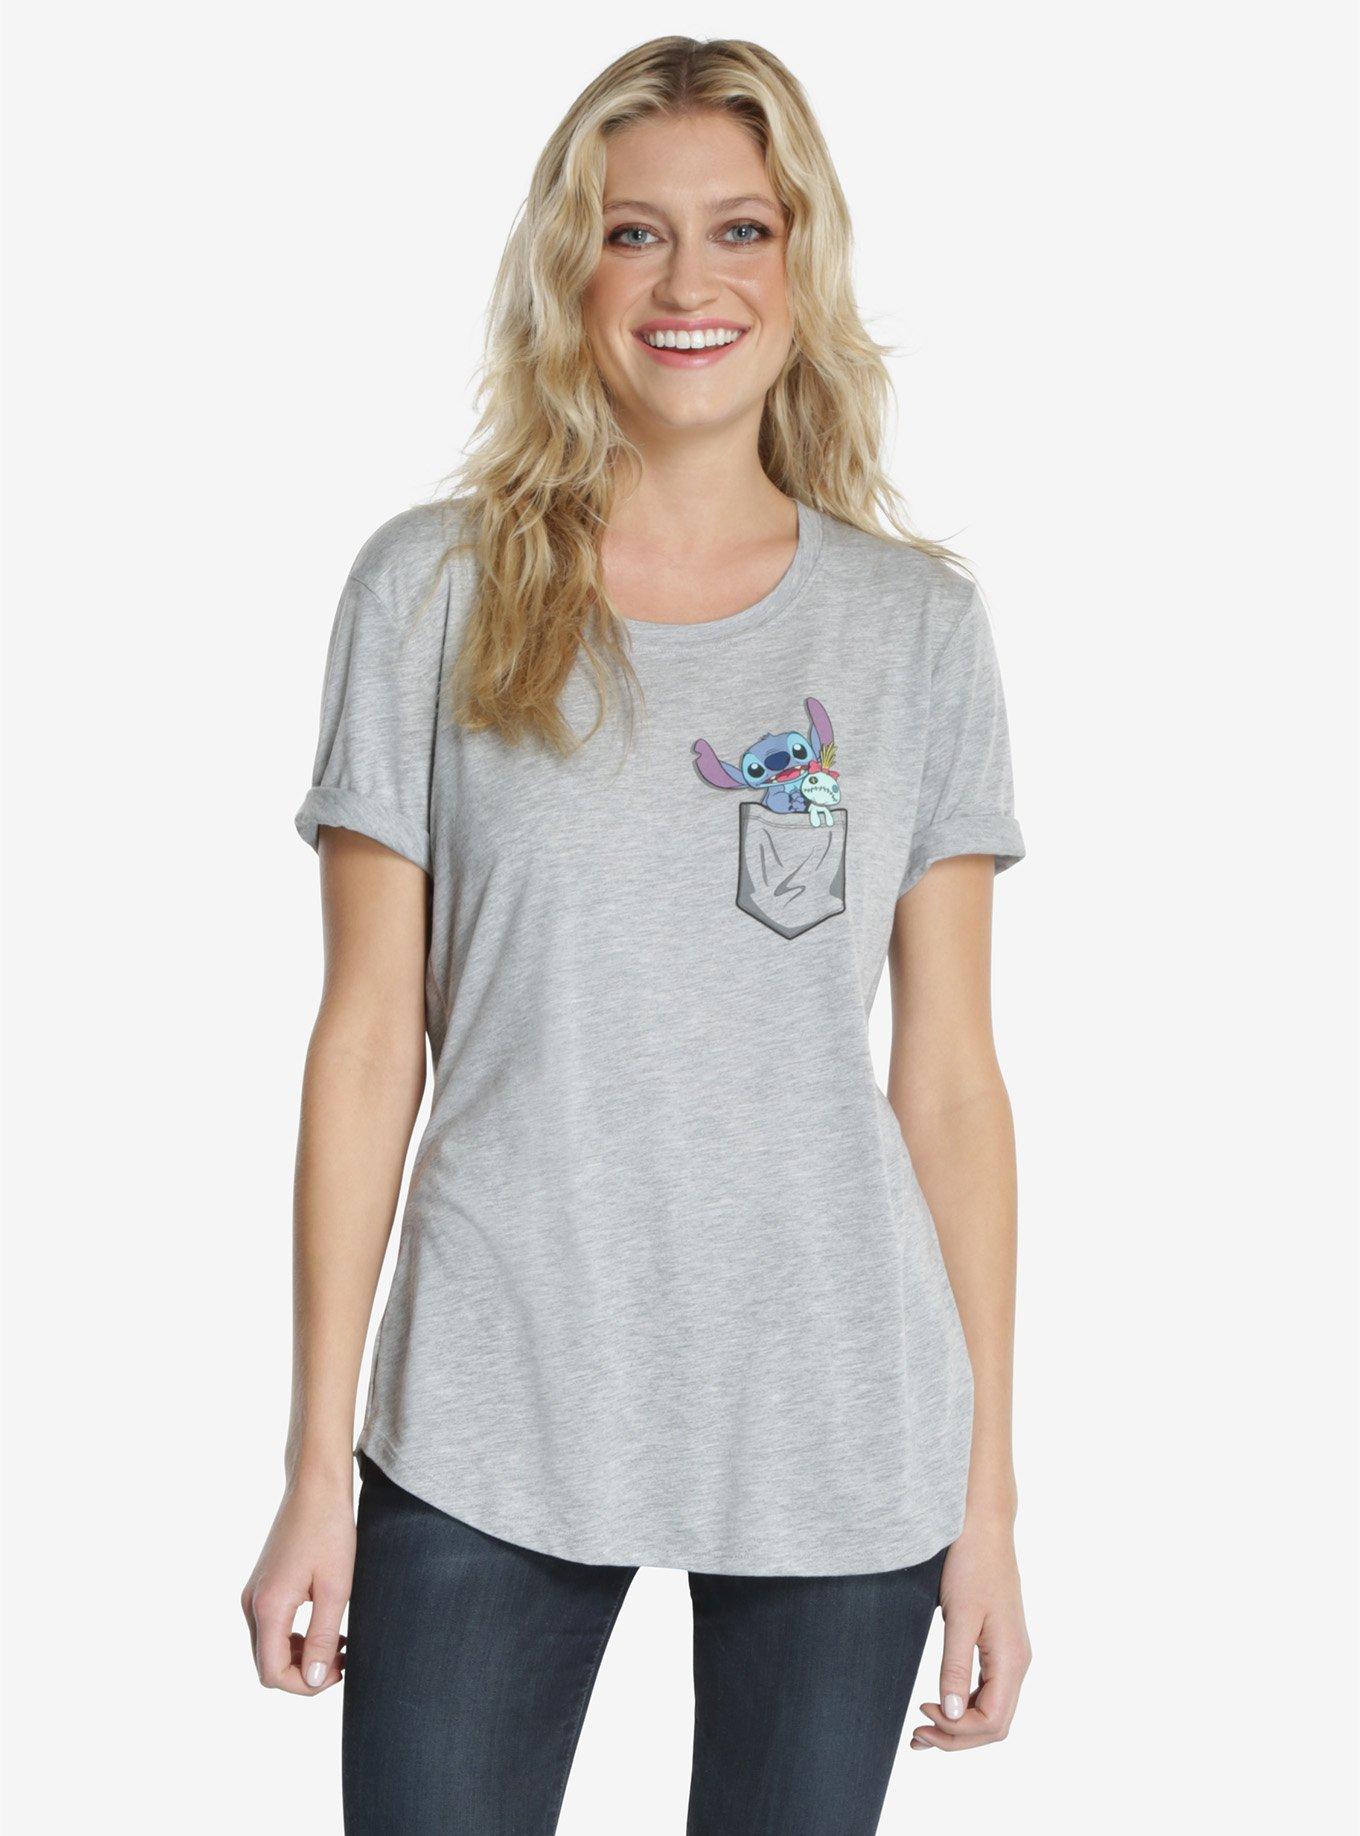 Stitch and Scrump | Official Disney Tee T-Shirt / Women's / XL